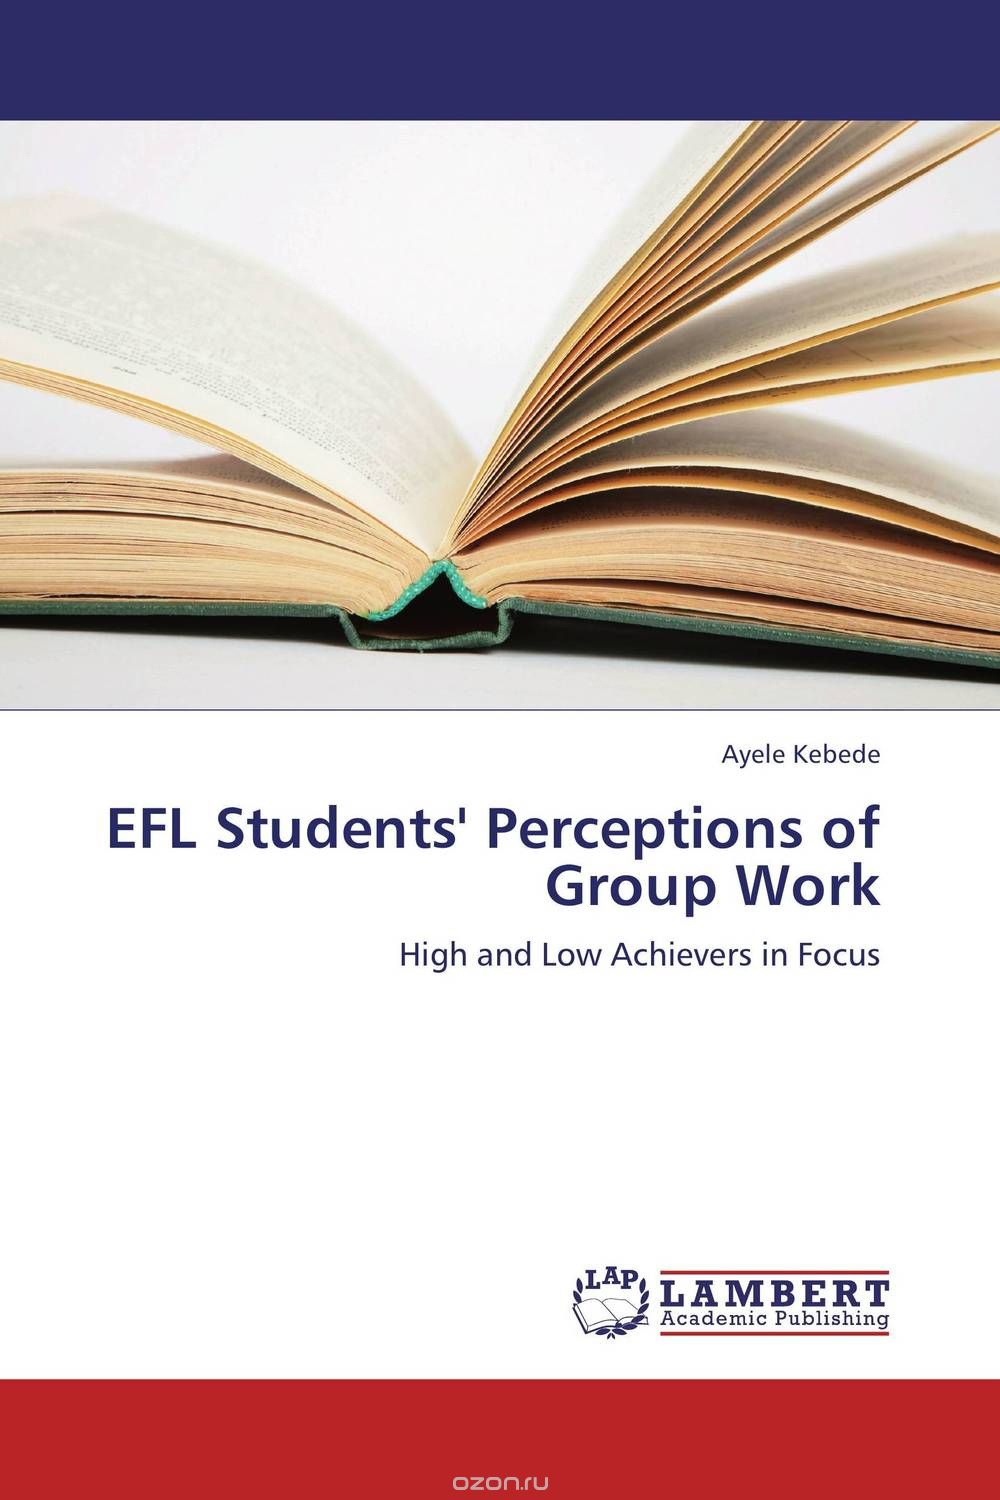 Скачать книгу "EFL Students' Perceptions of Group Work"